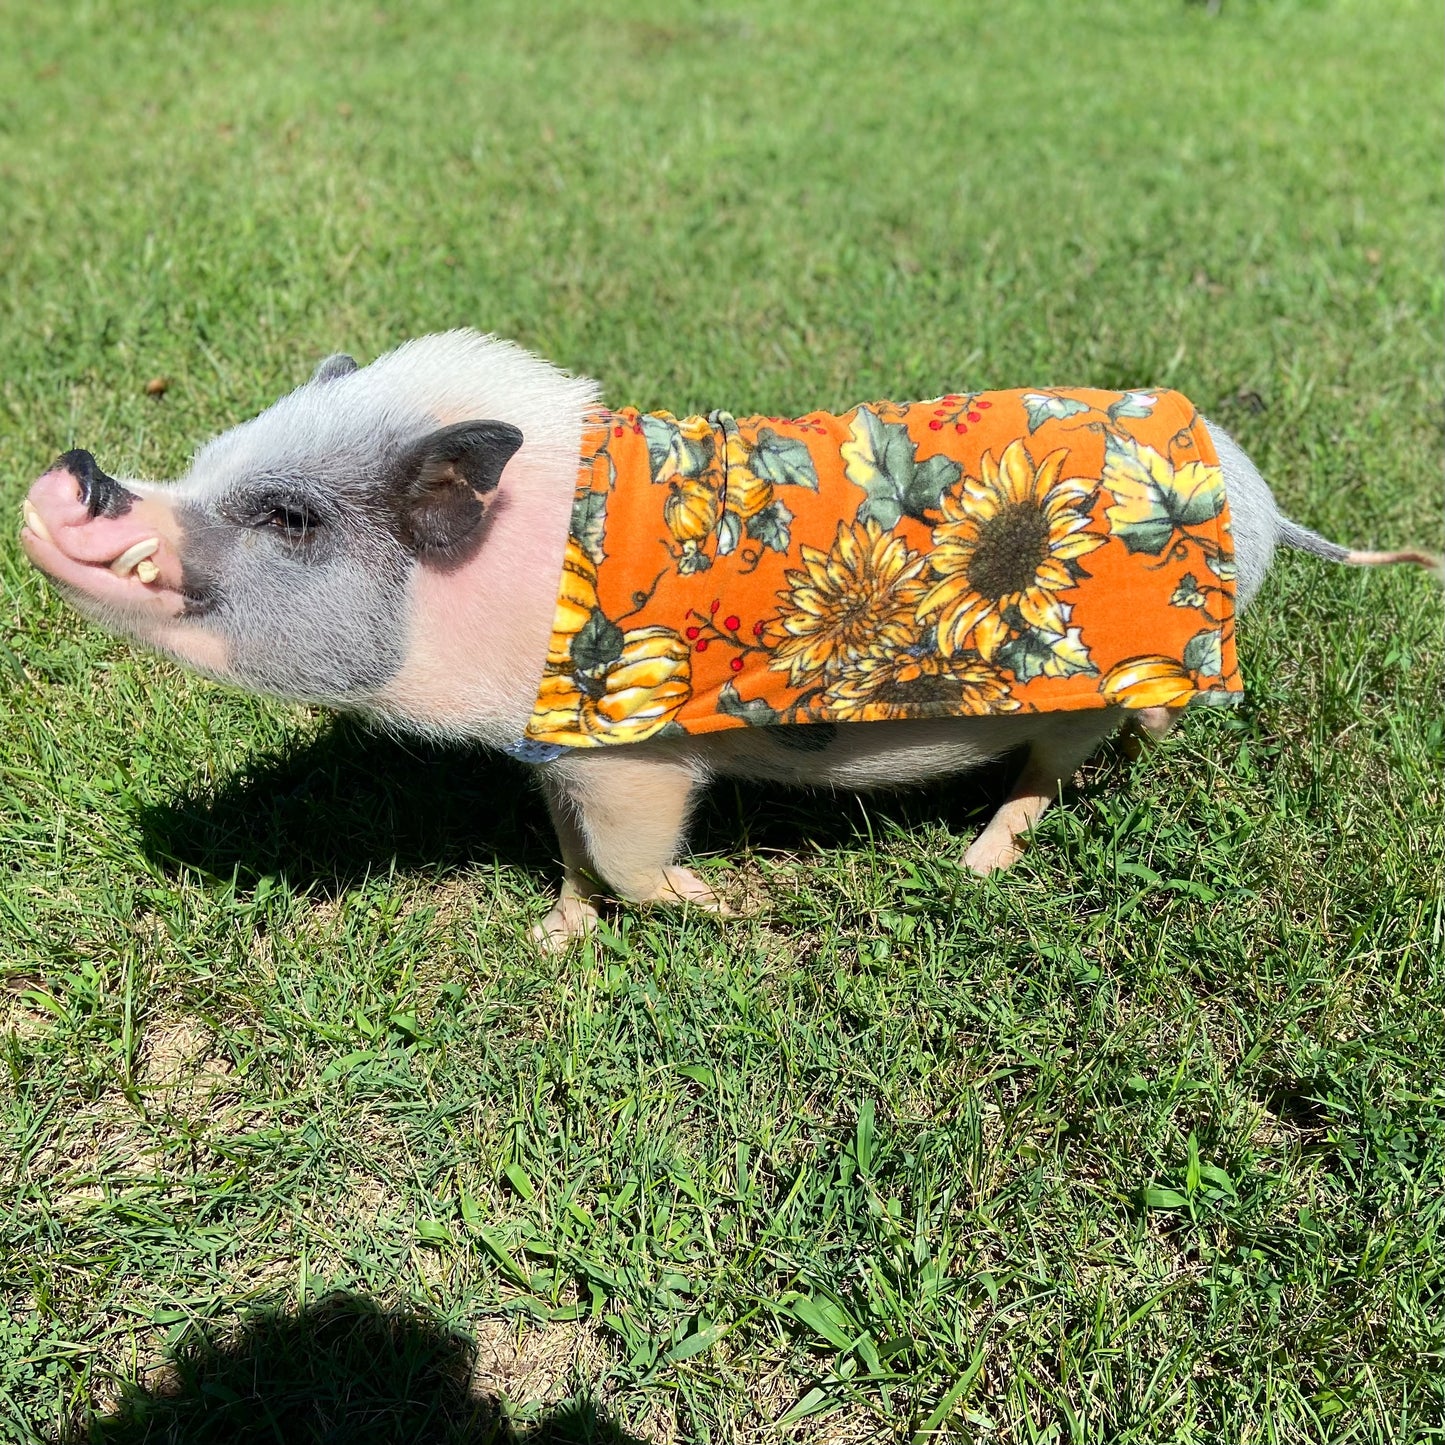 Pumpkin Patch Fleece Pet Pig Sweater, Mini Pig Coat, Warm Plush Jacket, Shirt, Clothing for Potbelly Pigs, Hogs, & Boar Clothes